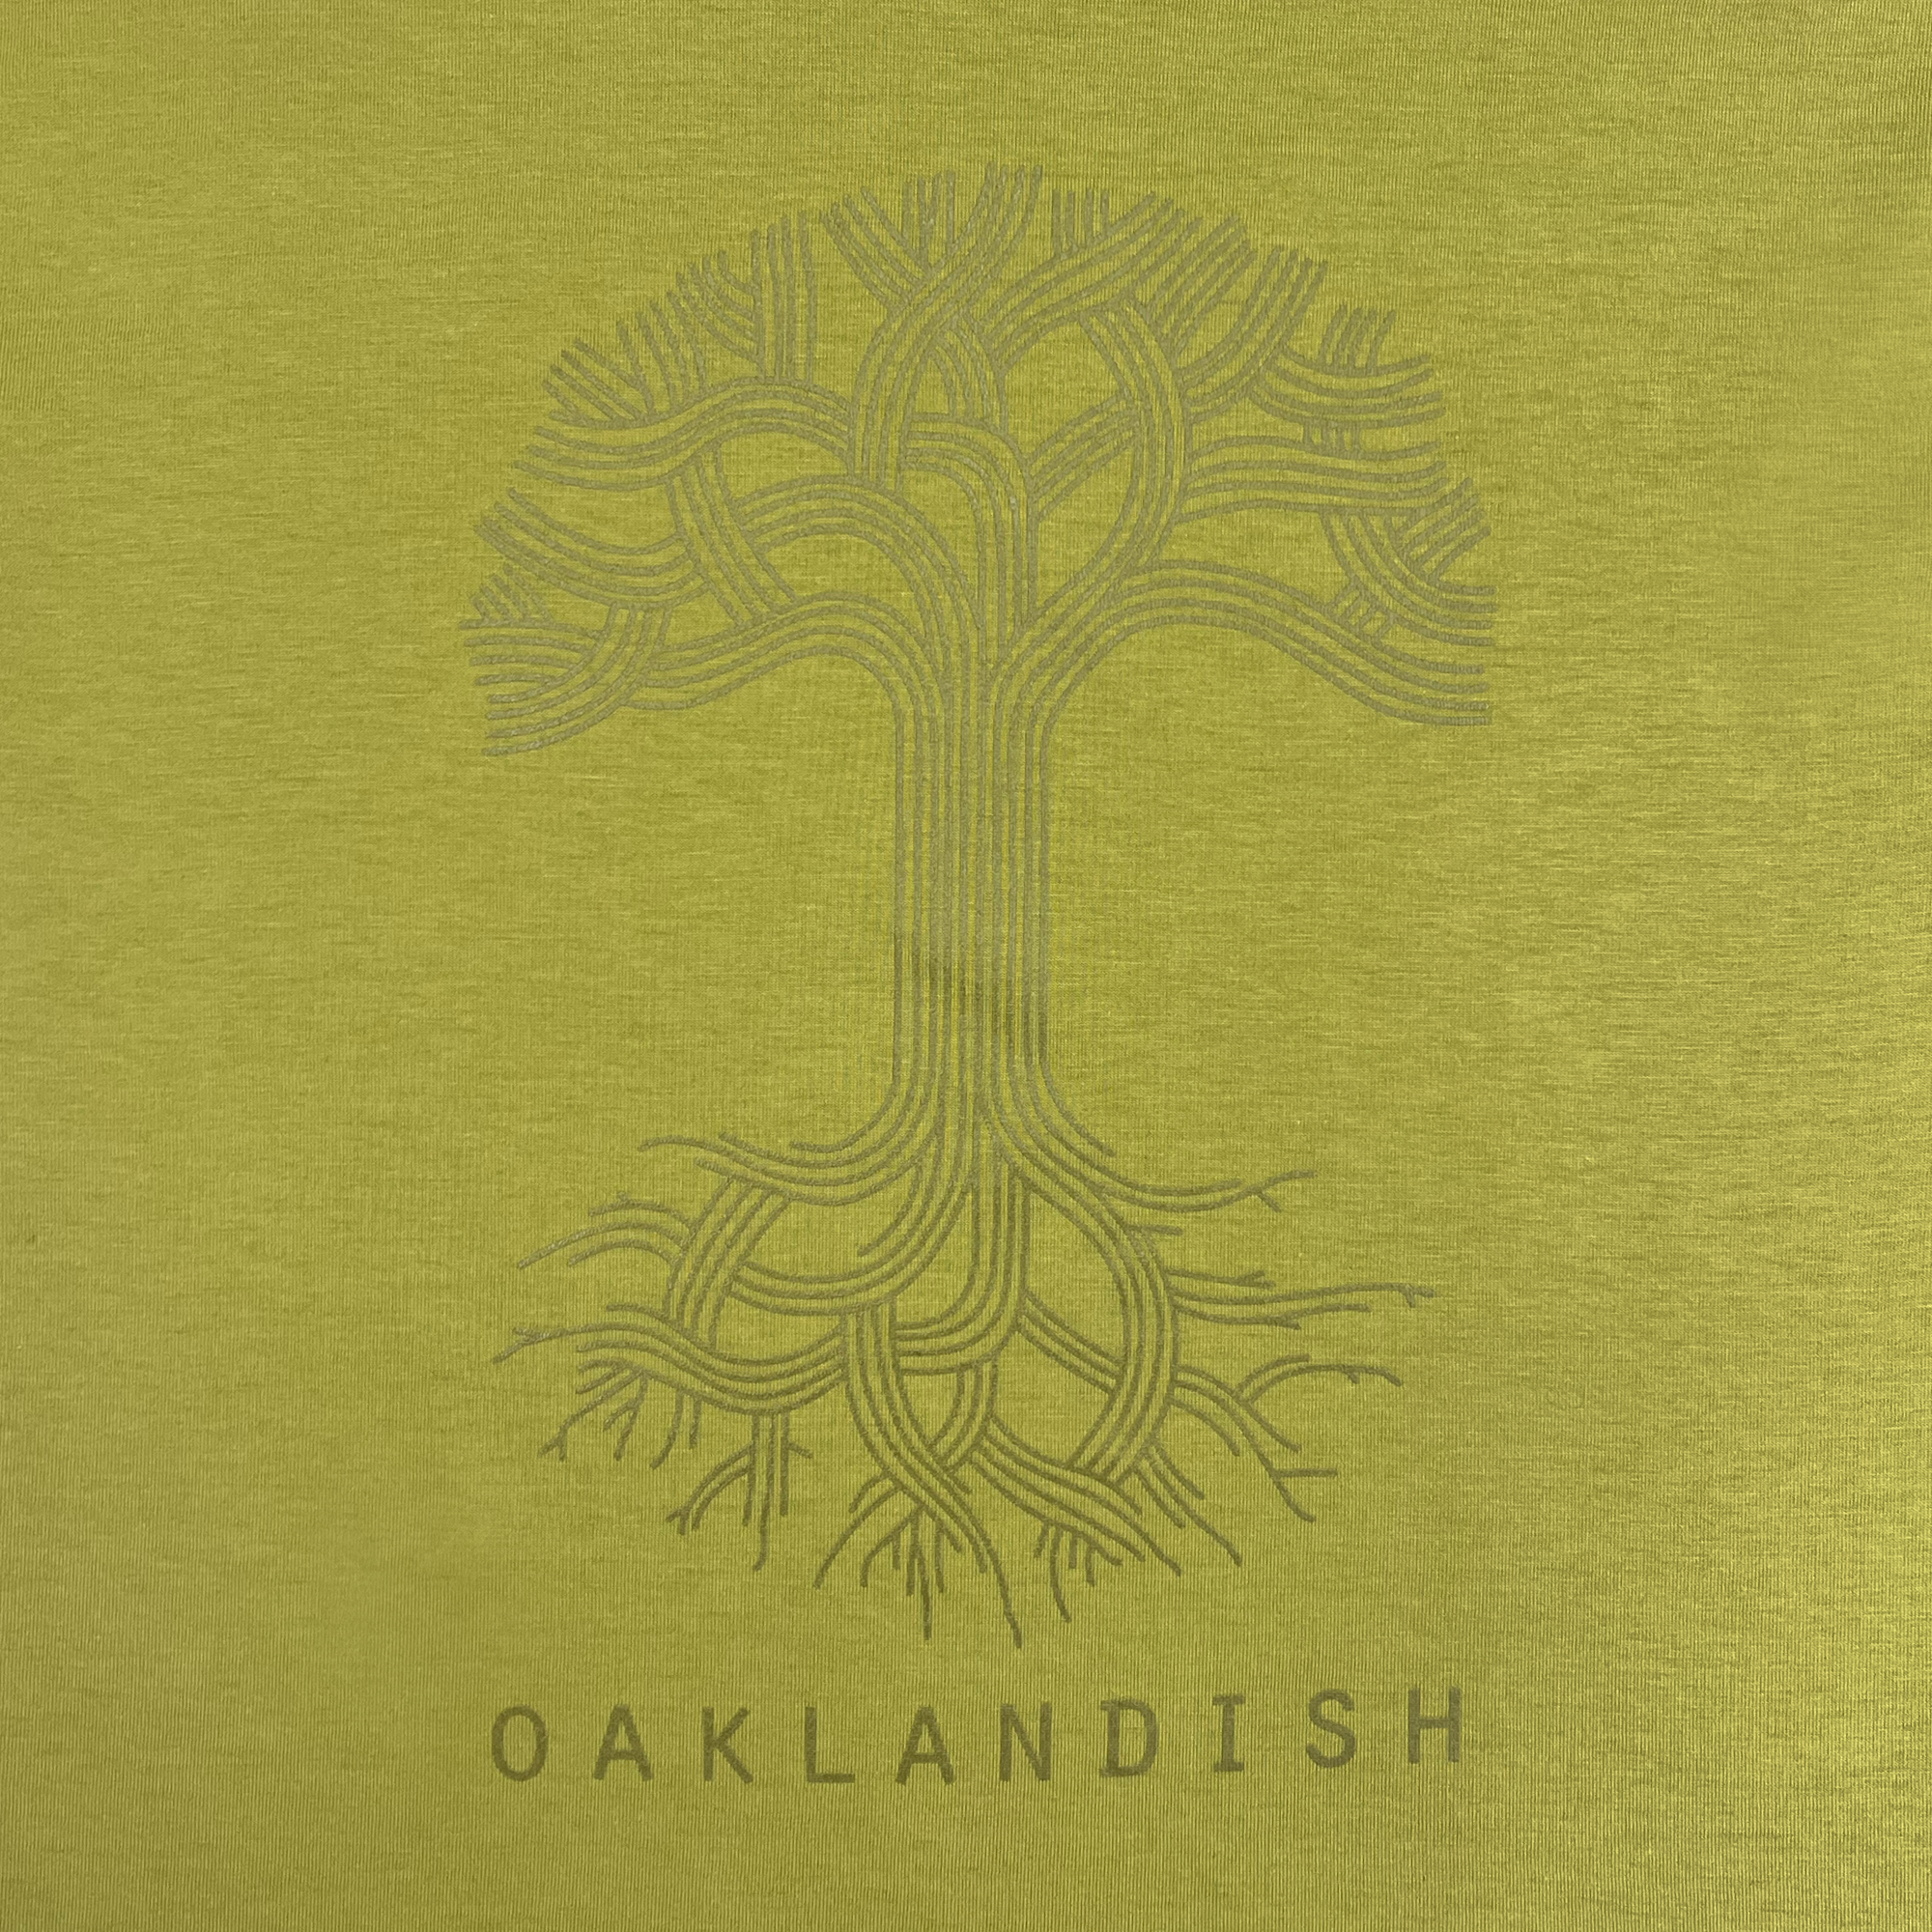 Oaklandish Classic Logo Tee